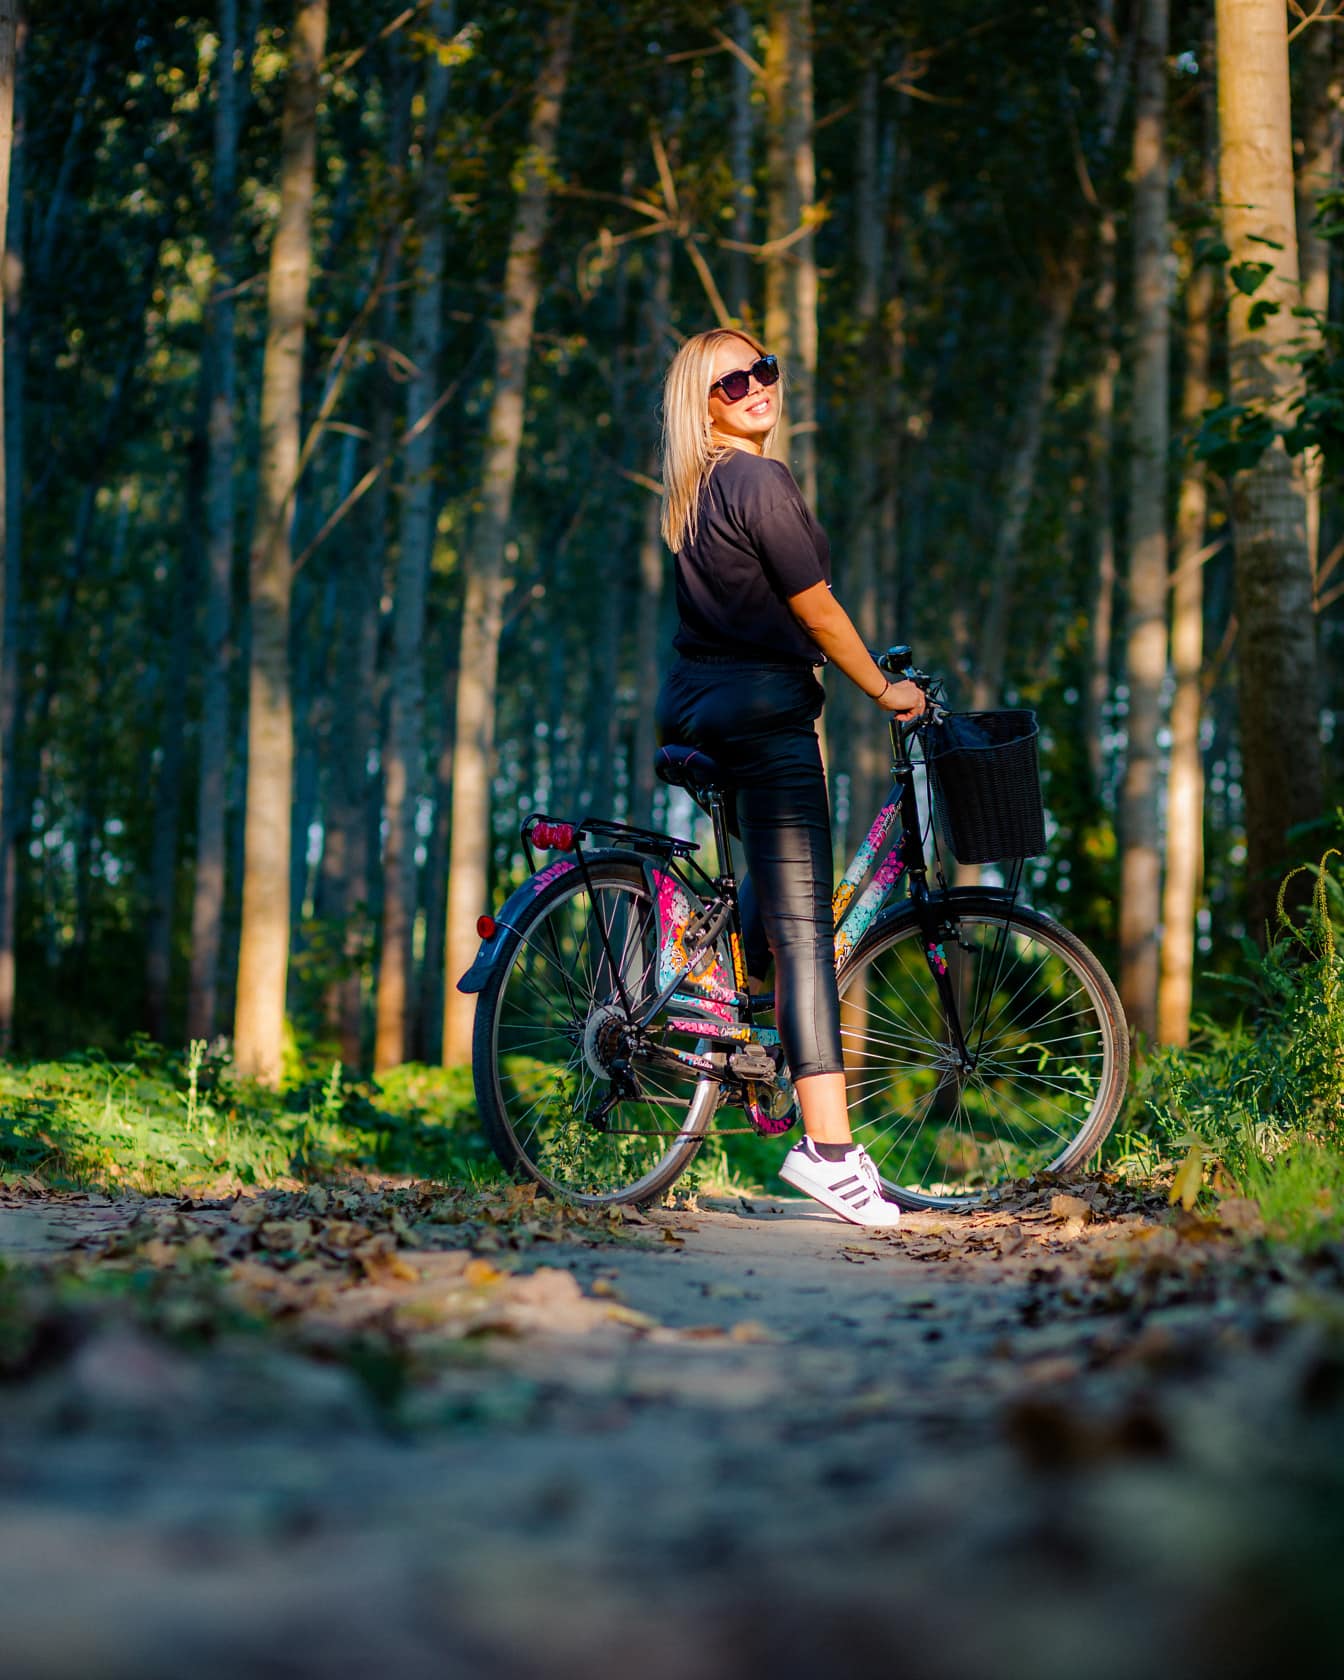 Adolescente de cabelo loiro adorável na bicicleta na floresta